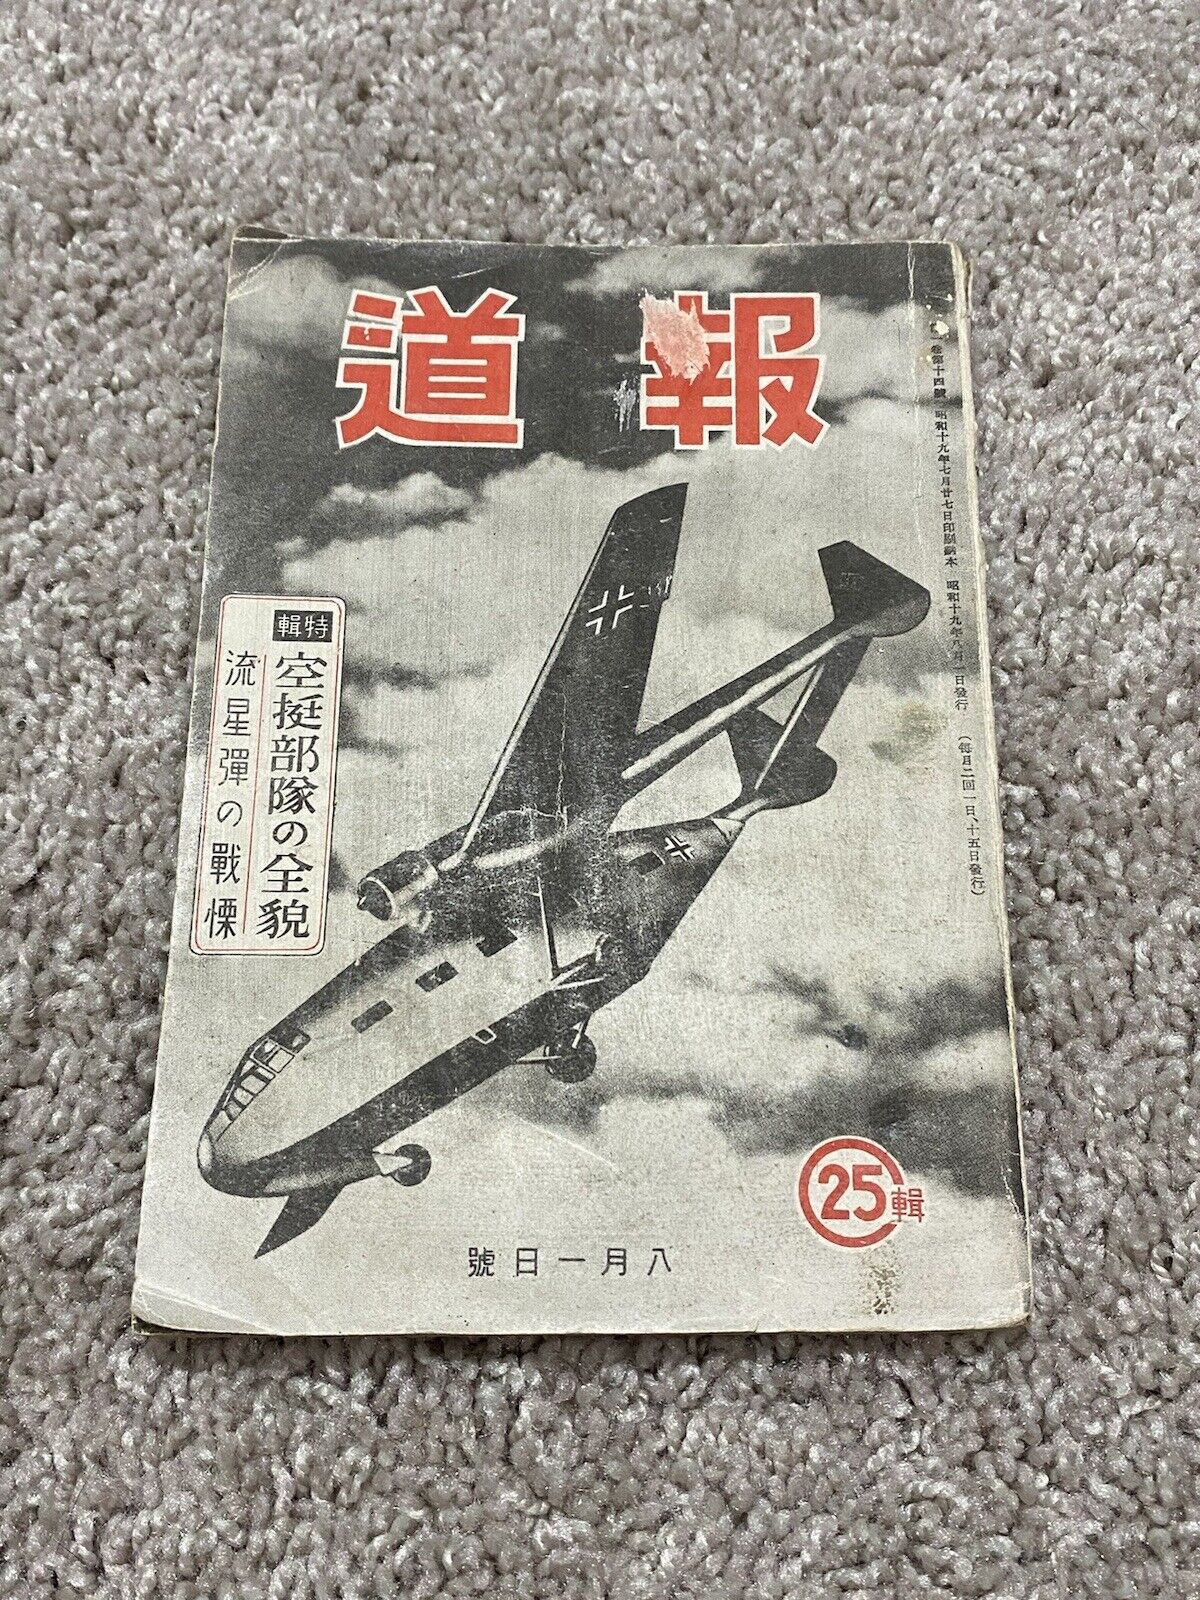 WW2 Japanese Magazine German Aircraft